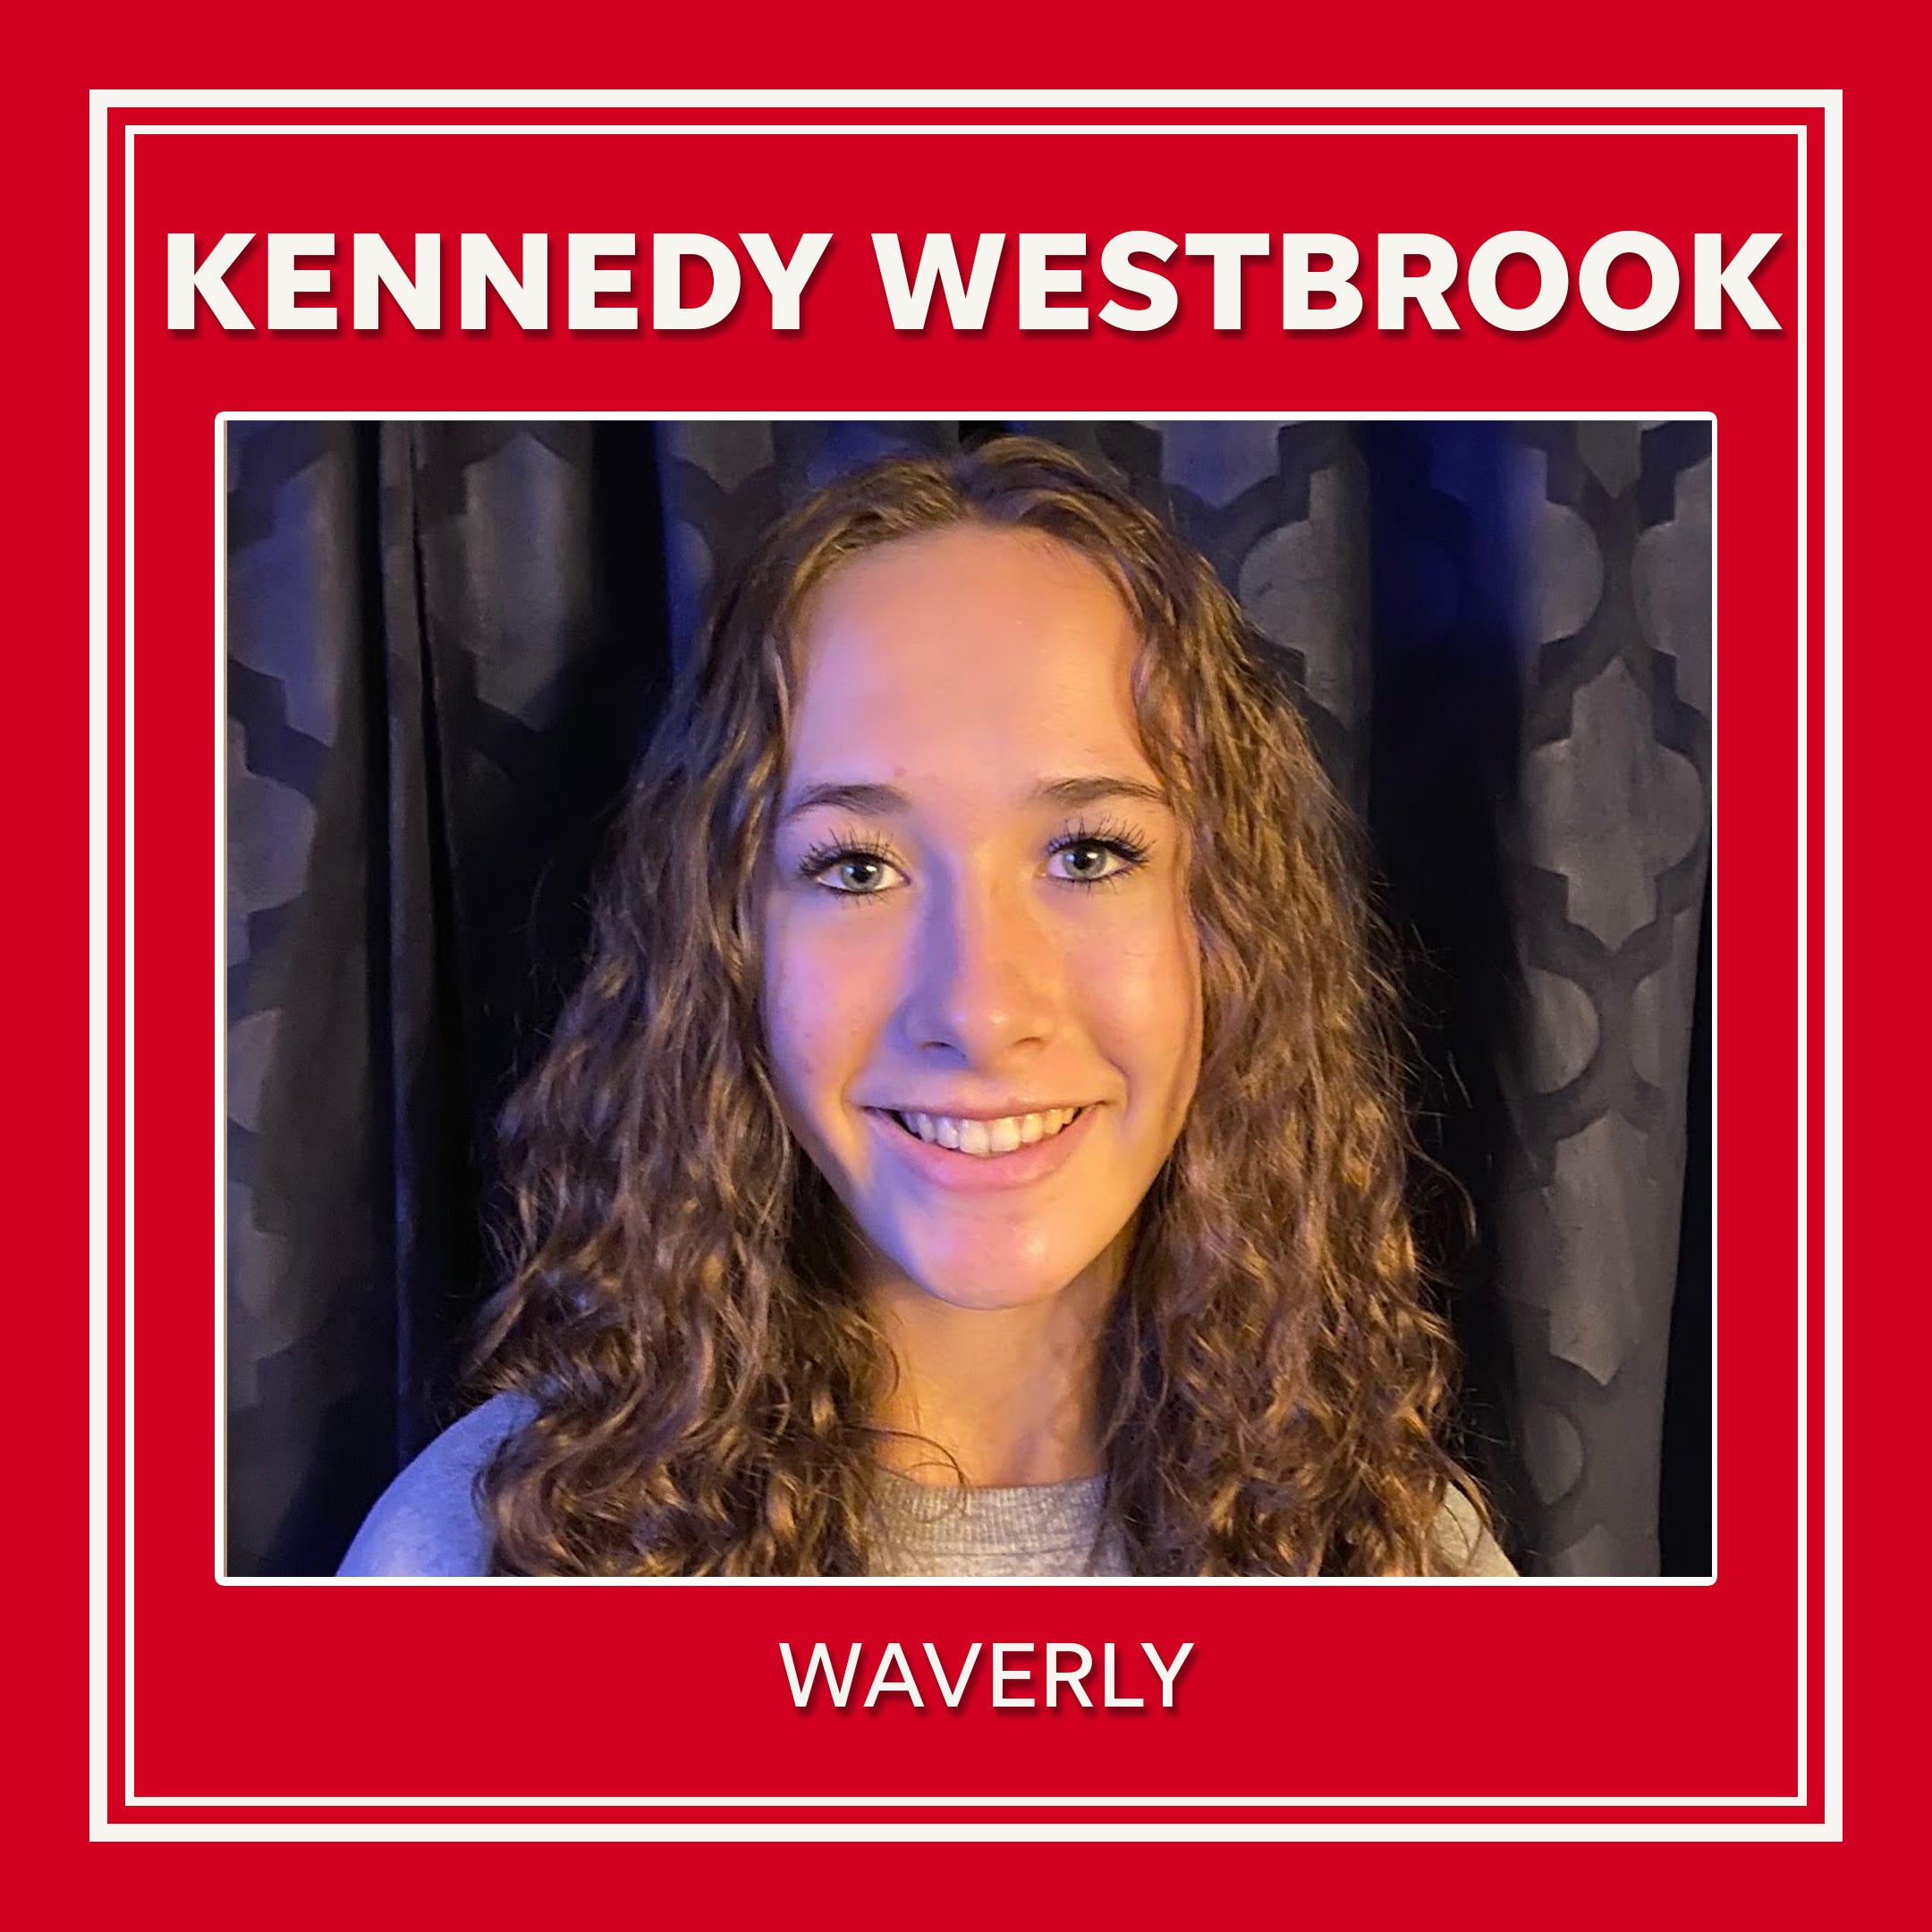 Kennedy Westbrook